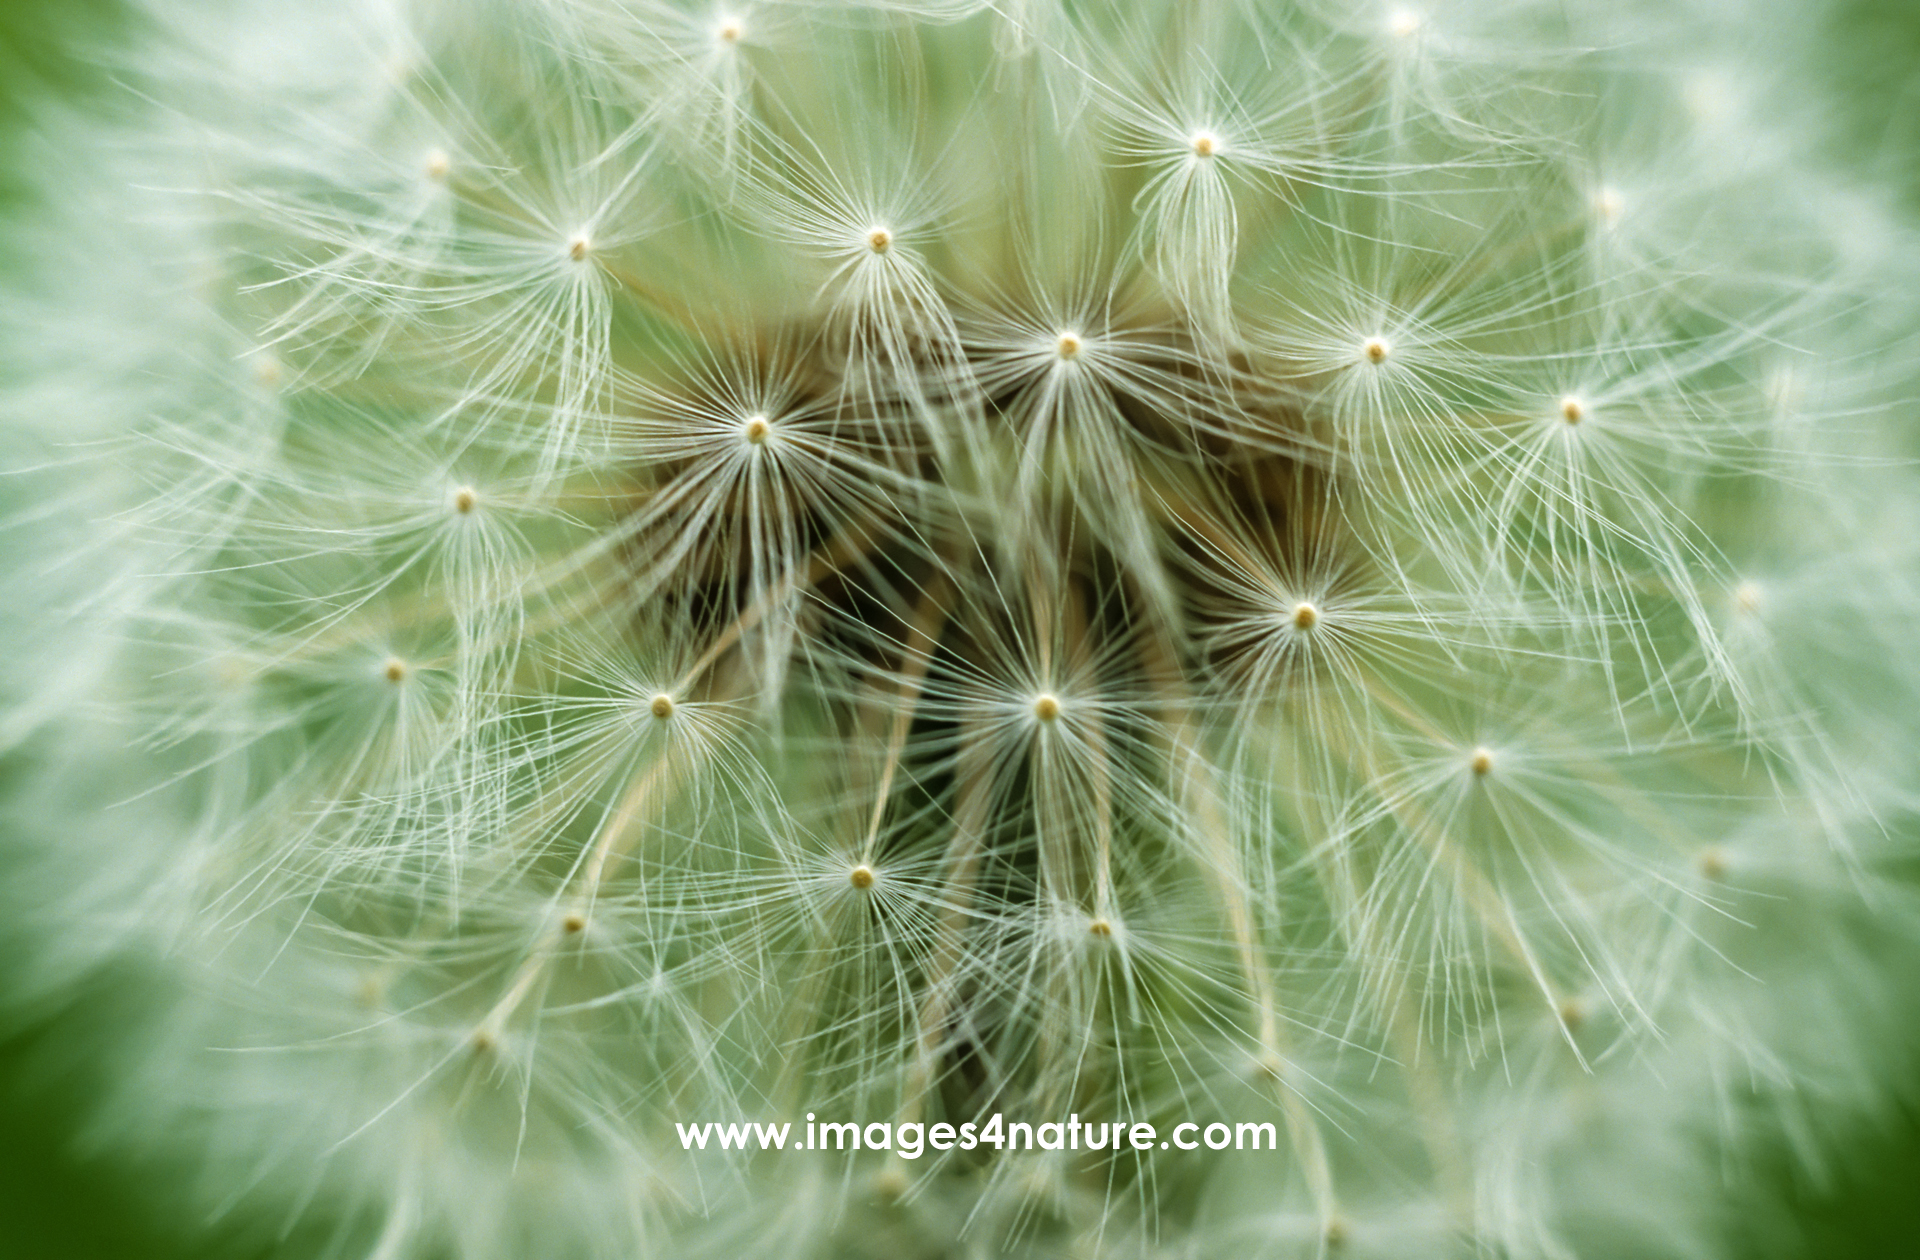 Macro view of a dandelion blowball flowerhead